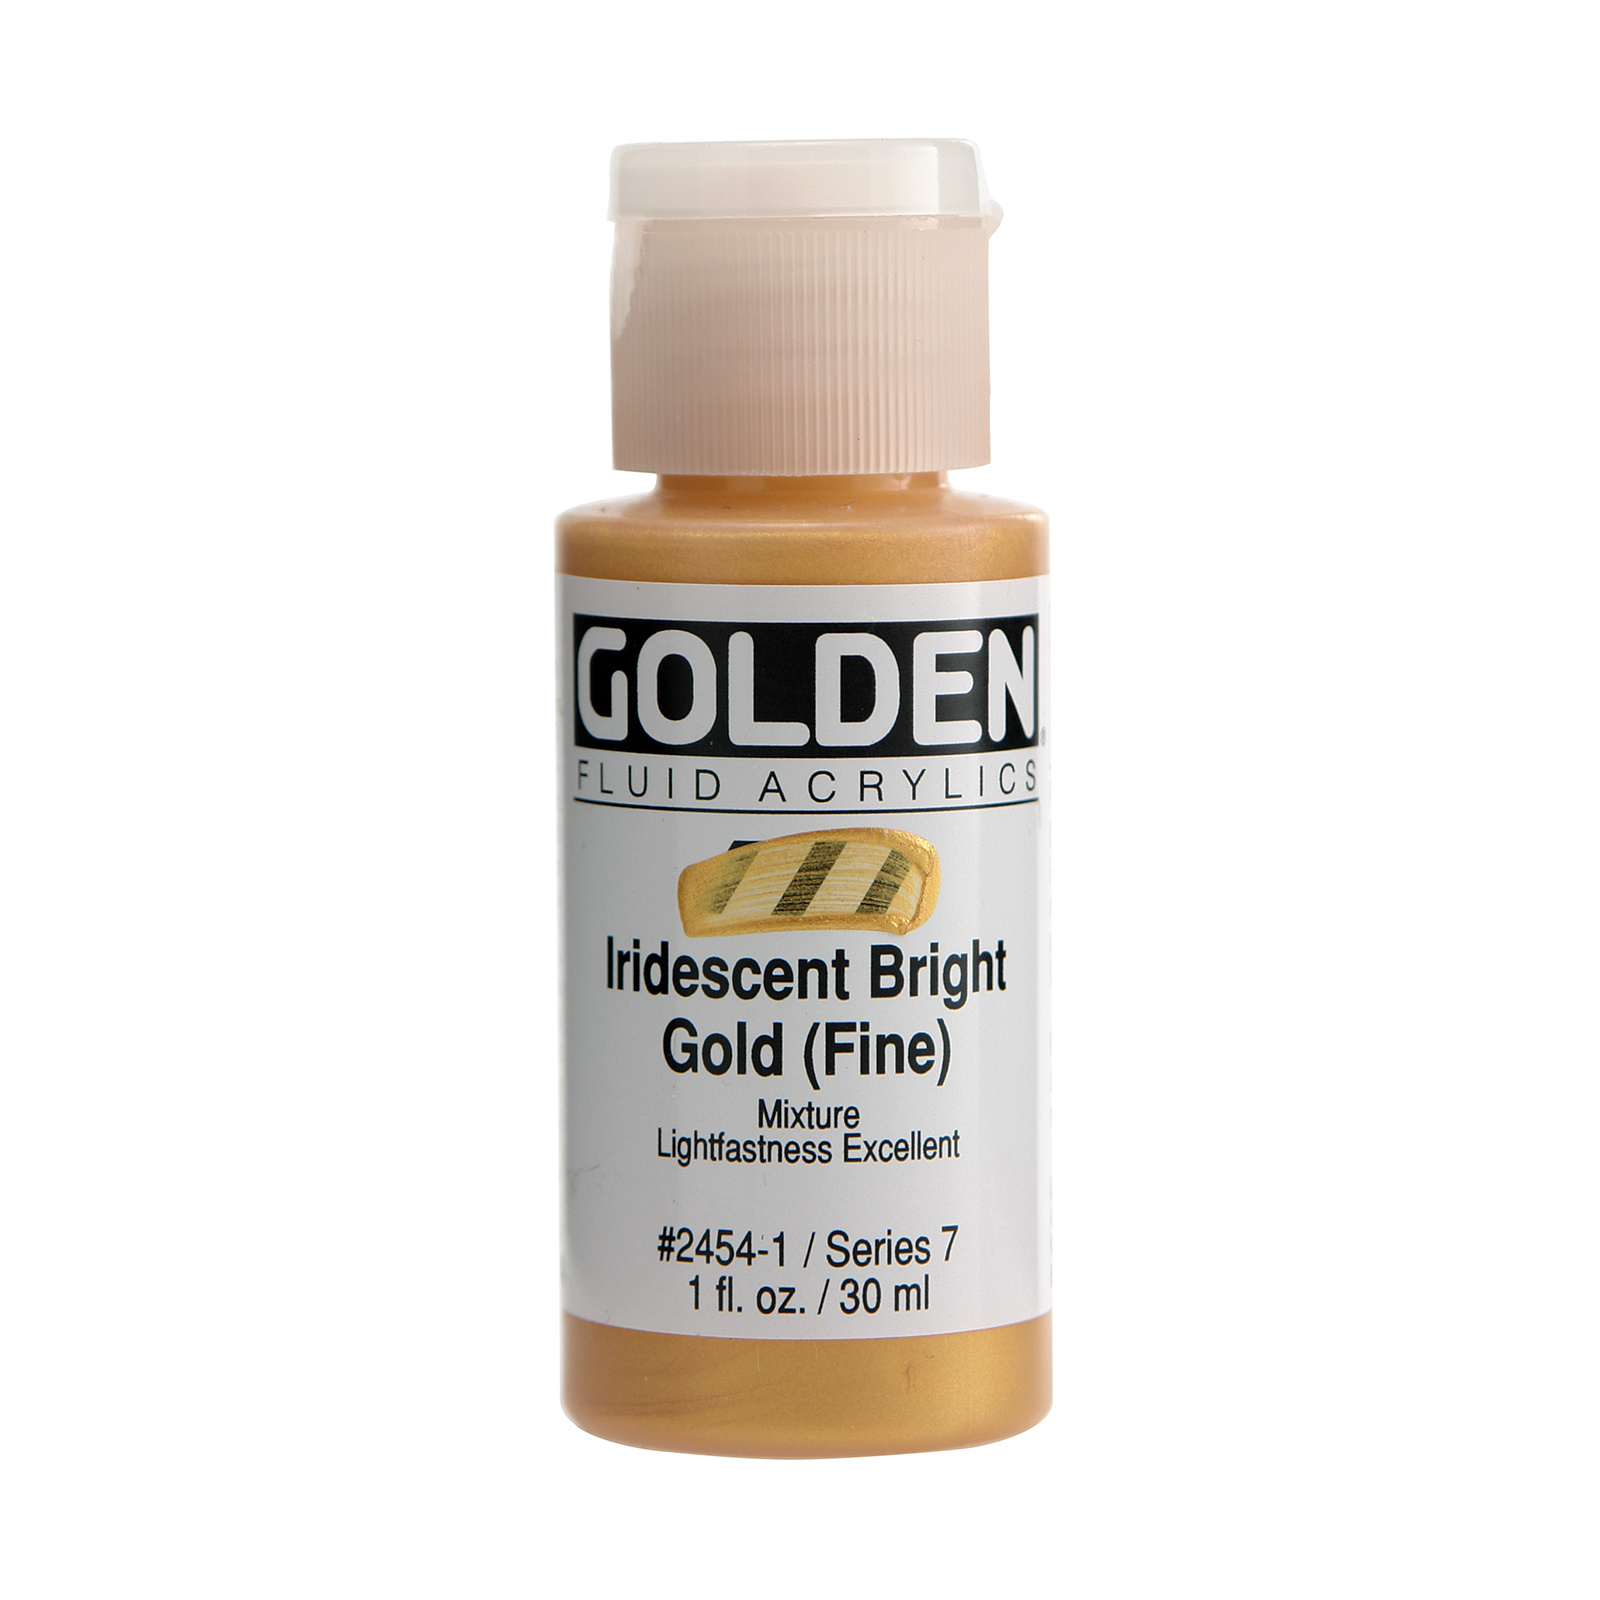 Golden Iridescent Fluid Acrylics, 1 oz., Iridescent Bright Gold